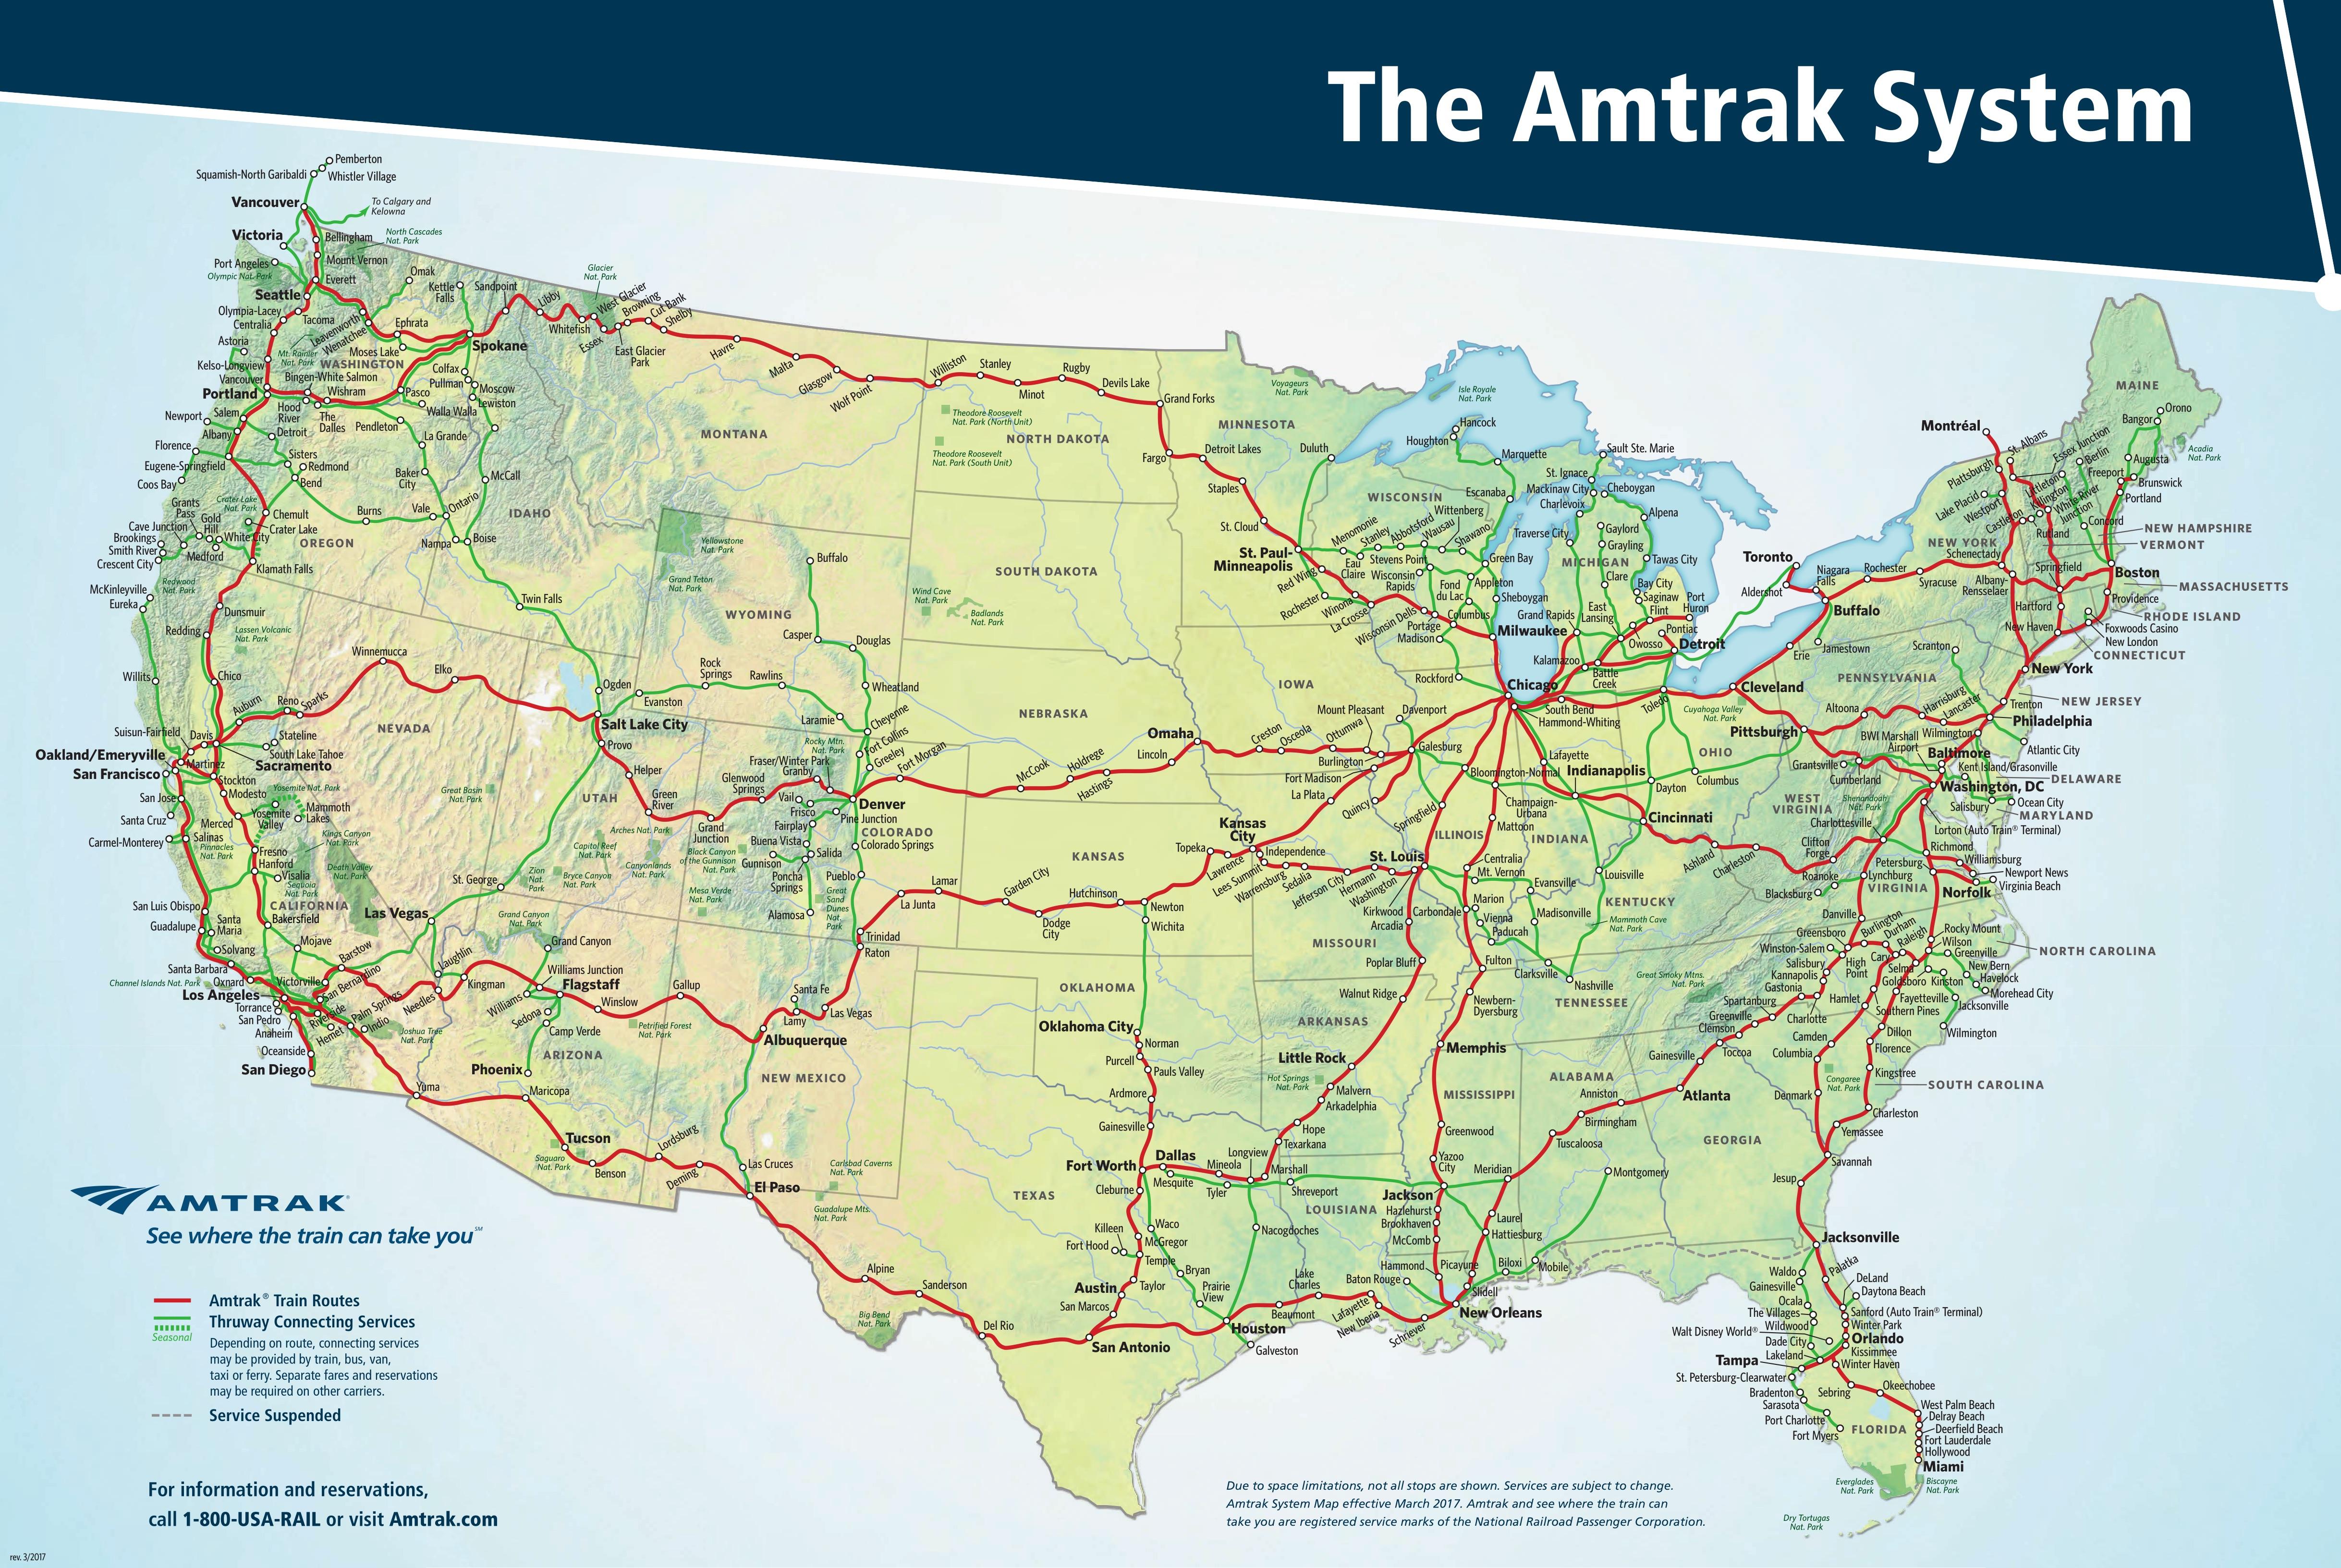 Amtrak system map